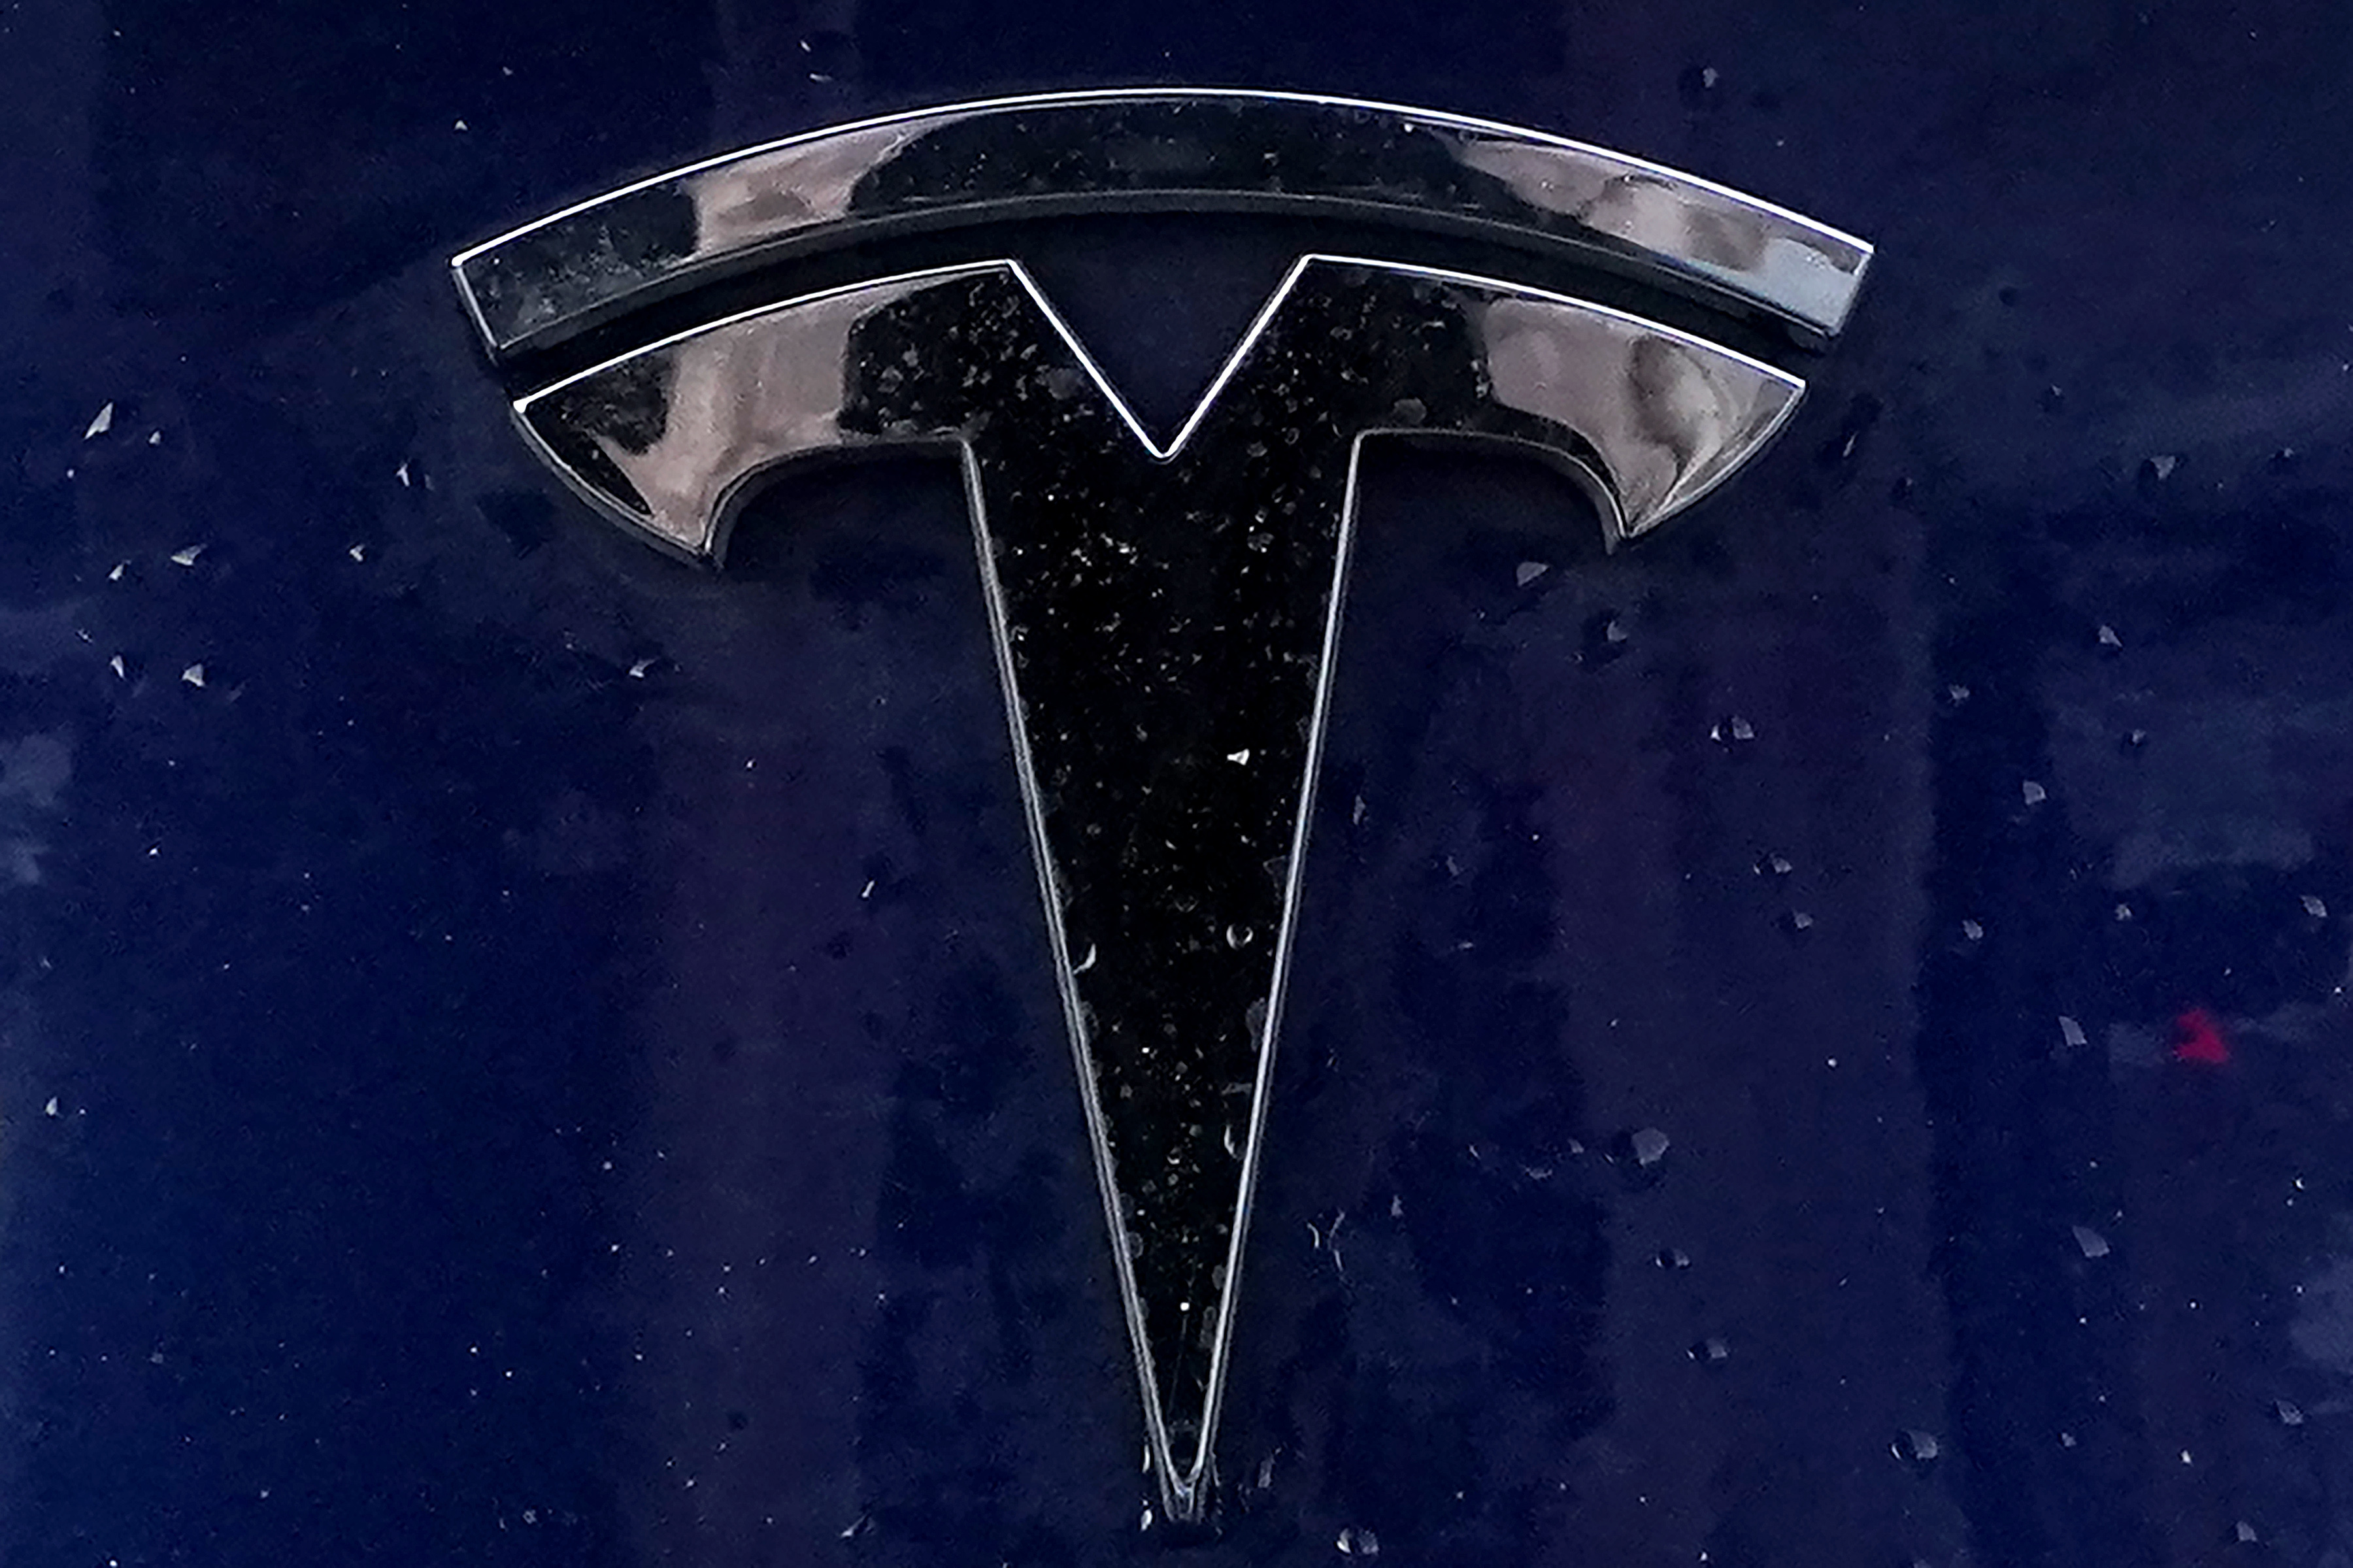 User blog:Tesla Motors/Ford Performance New Logo